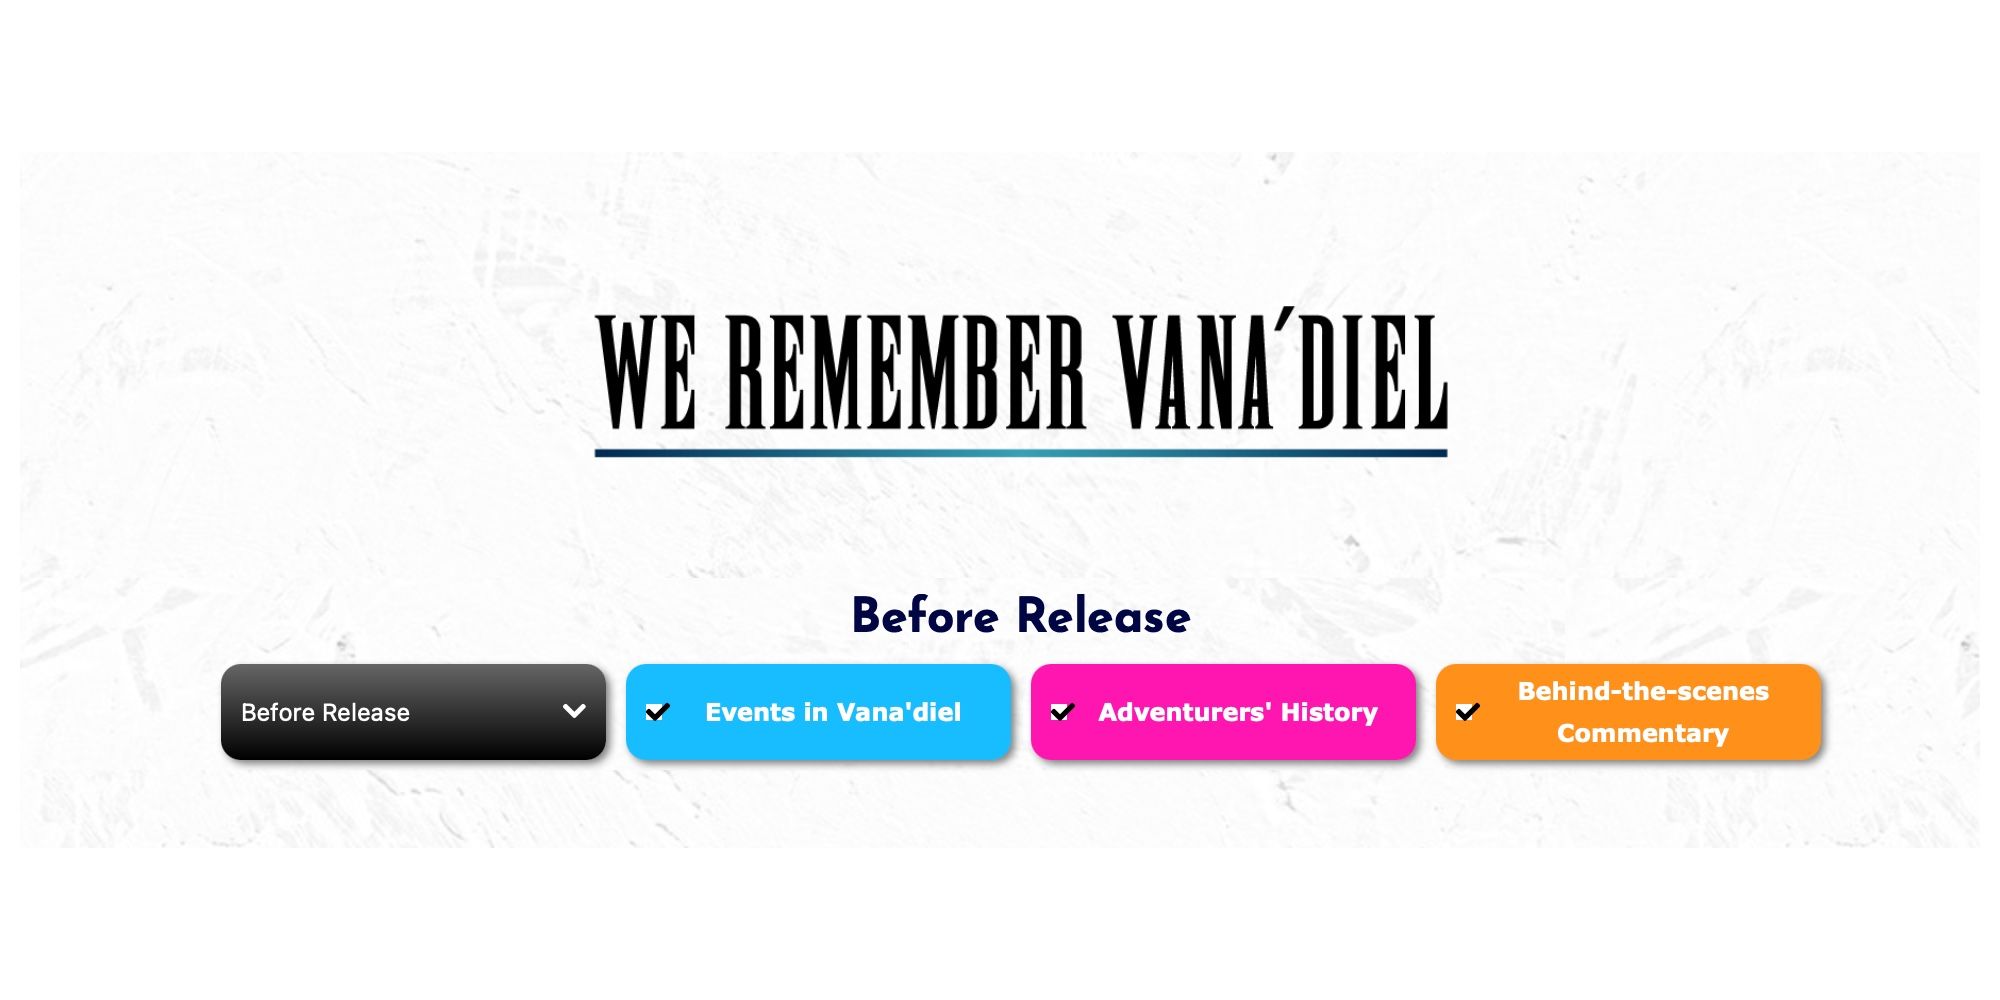 We Remember Vanadiel